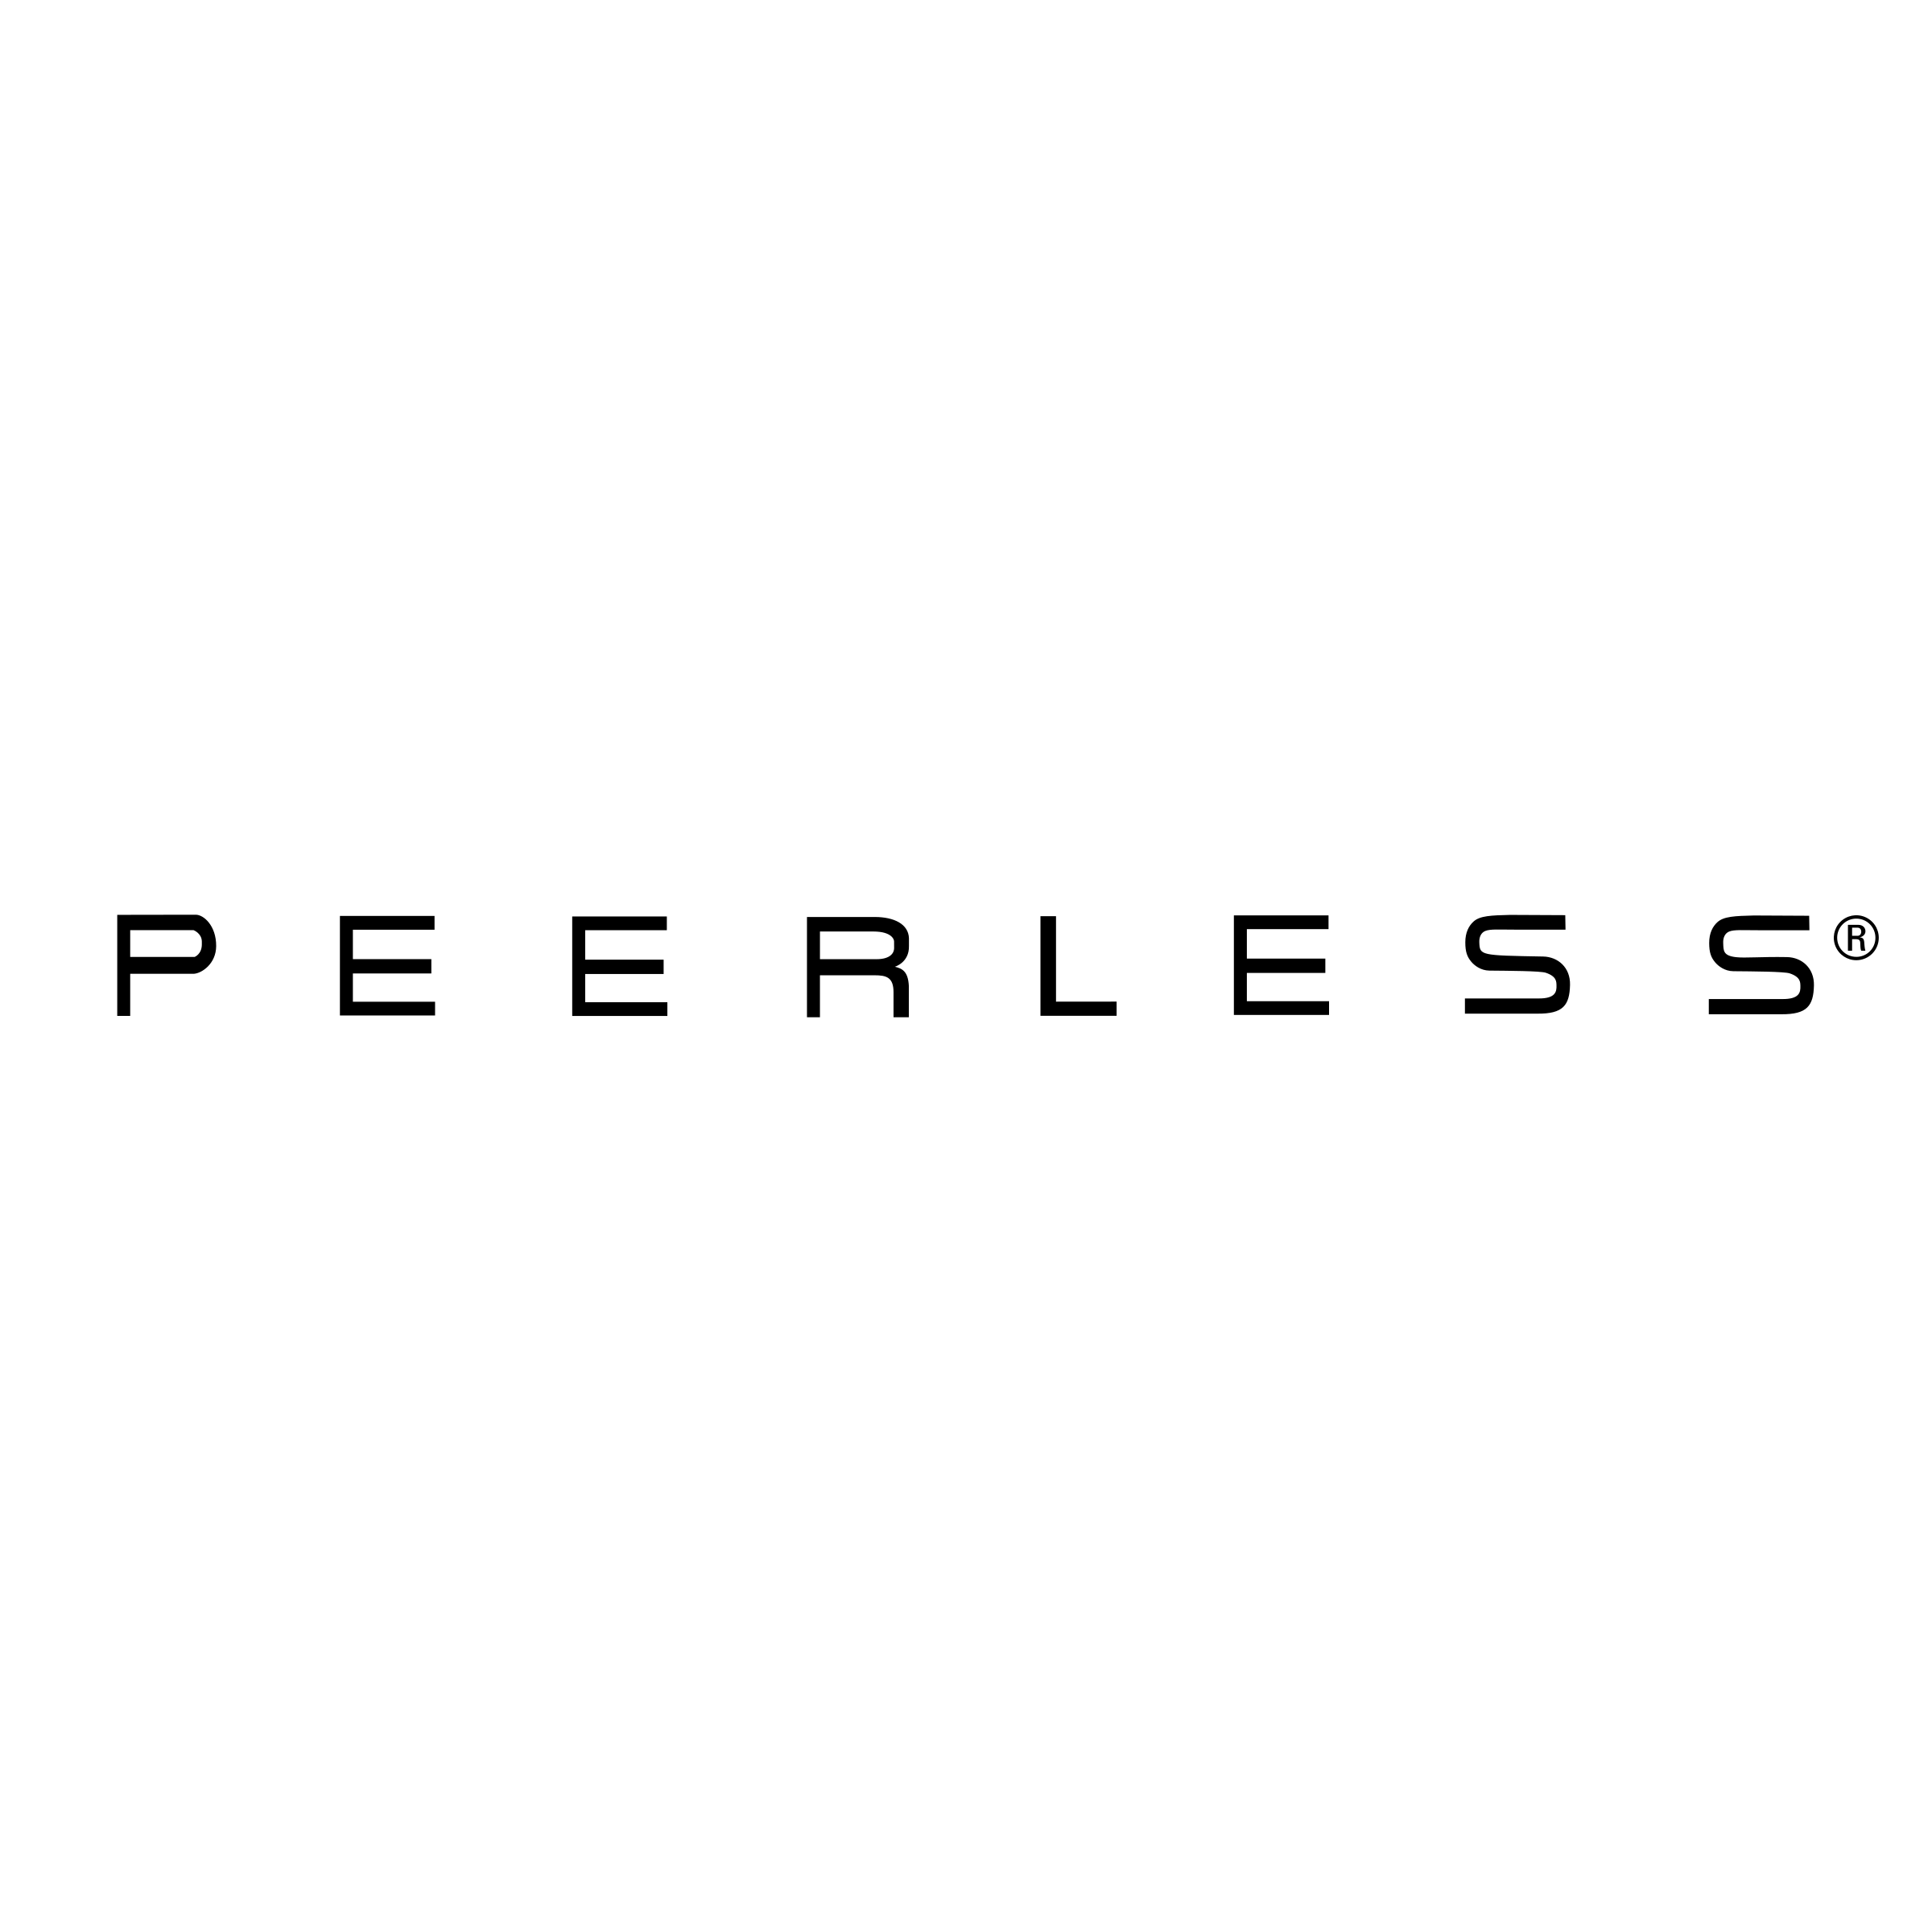 Peerless Logo - Peerless Logo PNG Transparent & SVG Vector - Freebie Supply